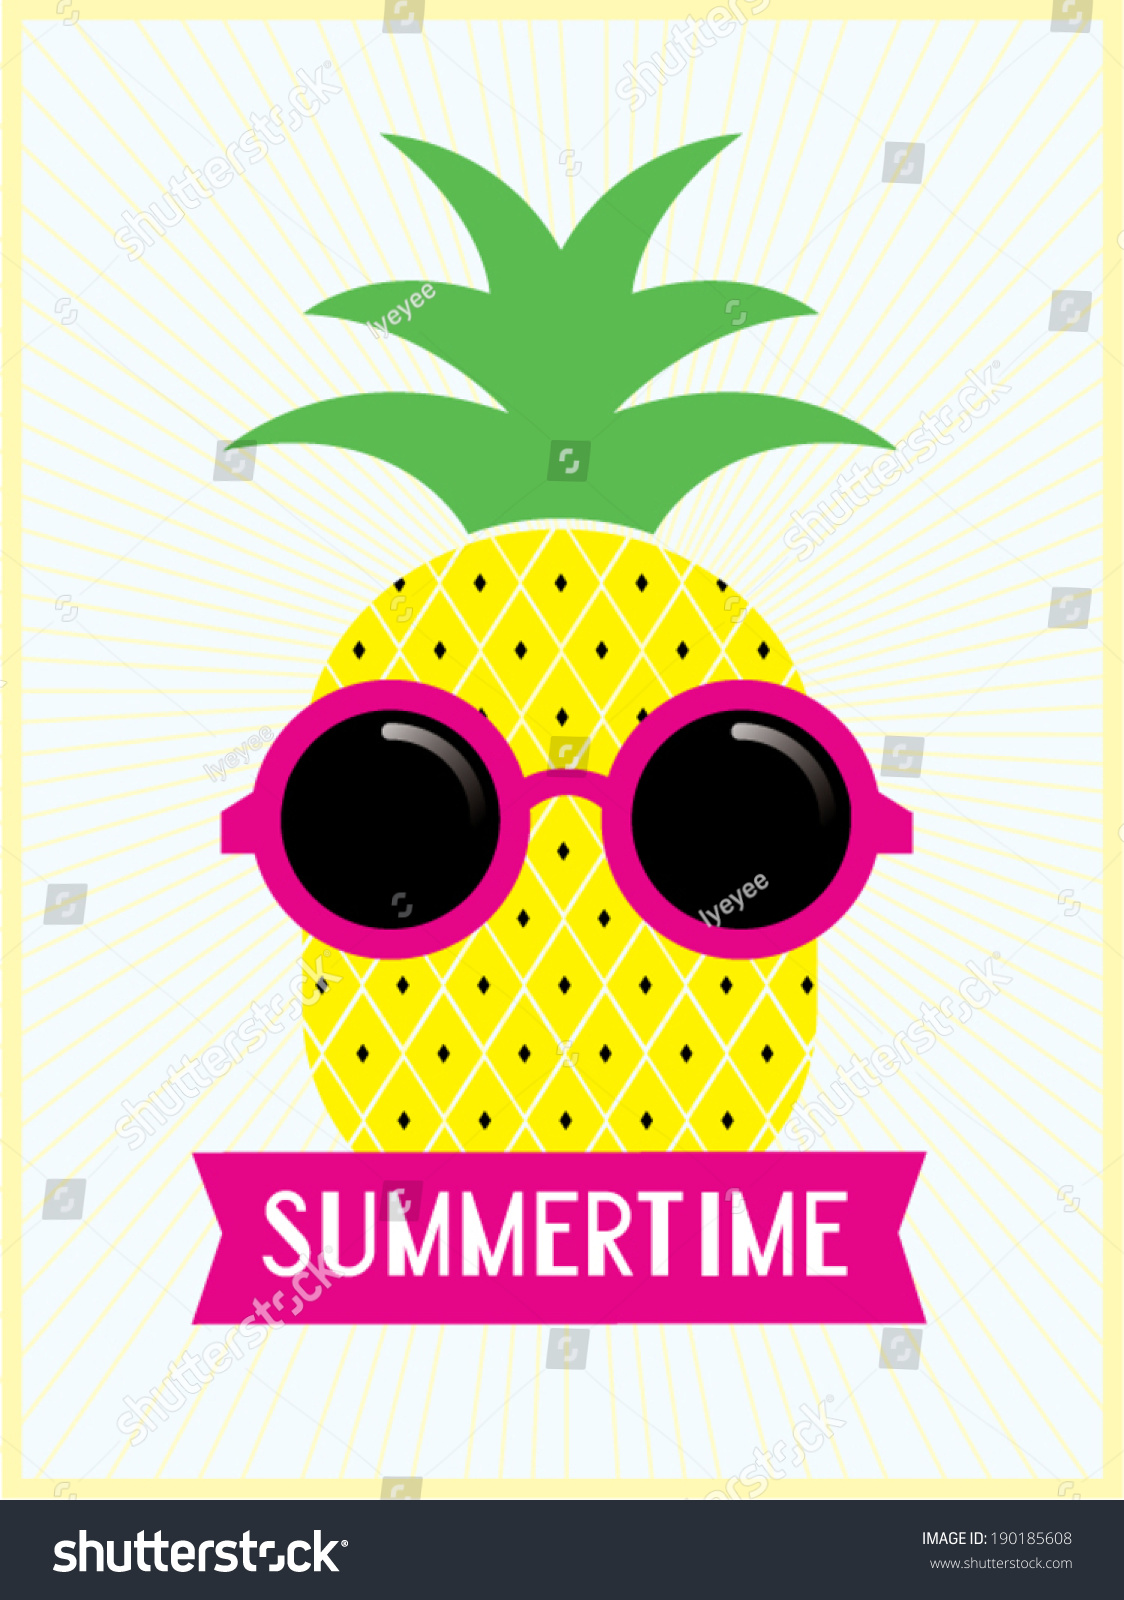 Pineapple Sunnies Summertime Template Vectorillustration ...